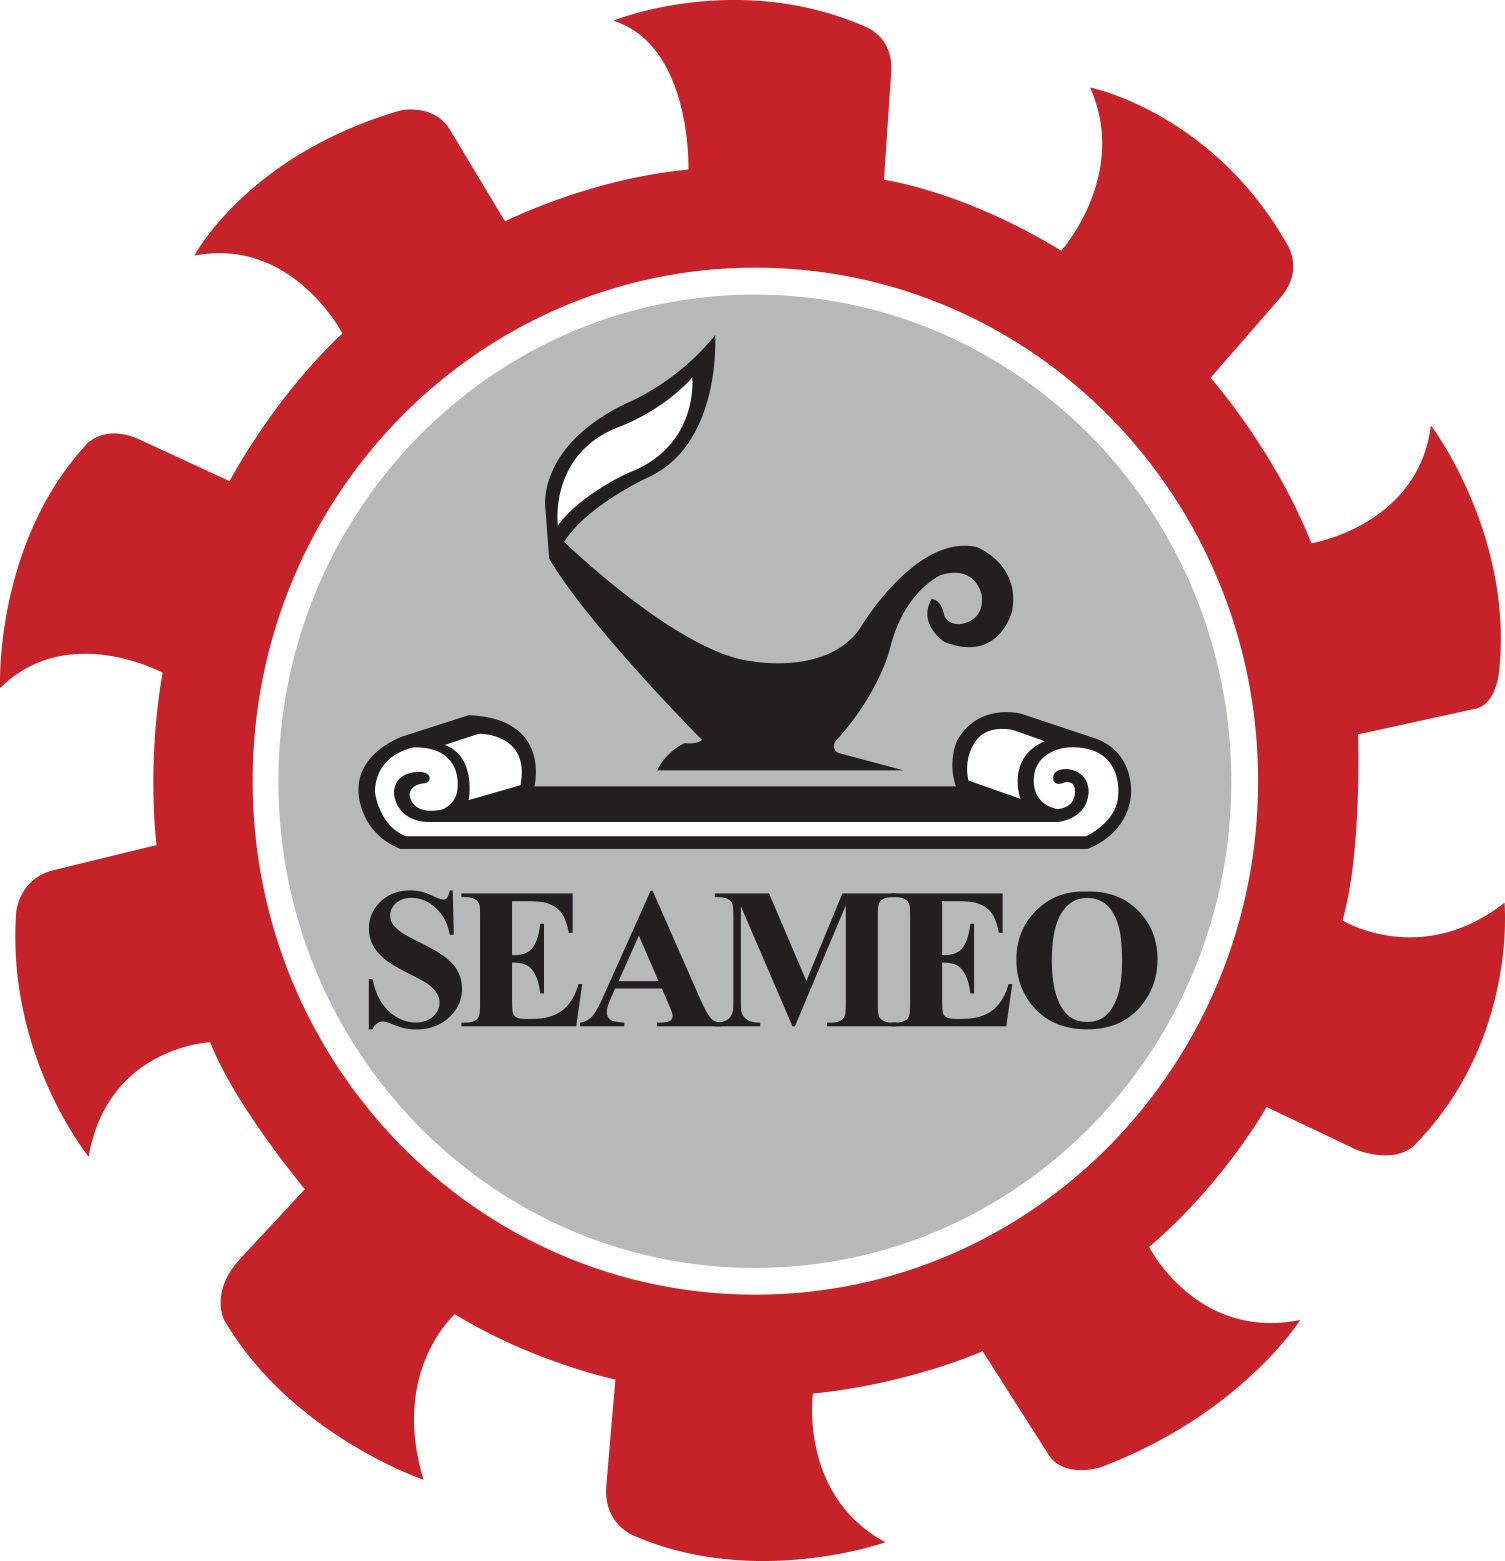 Press Release SEAMEO Centre Directors Meeting 2021: Reimagine the Future, 21 July 2021